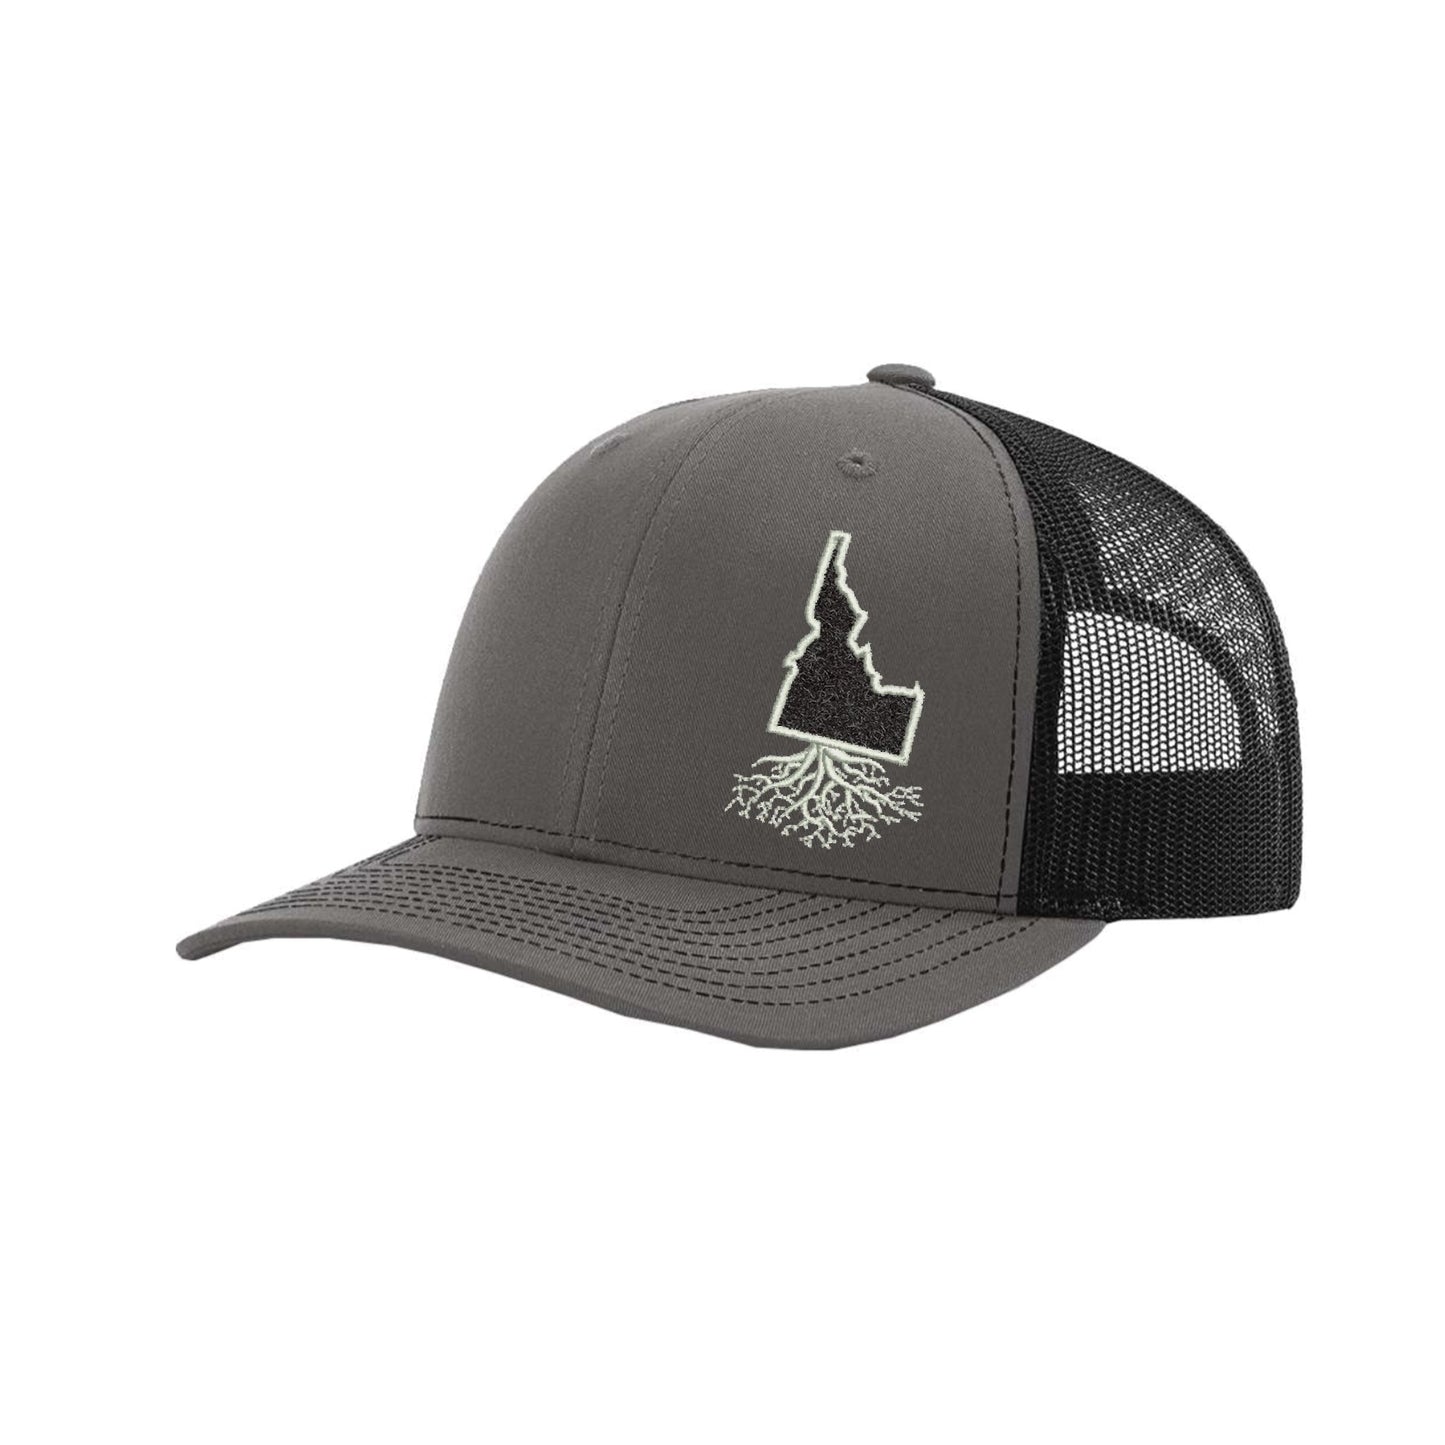 Idaho Hook & Loop Trucker Cap - Hats